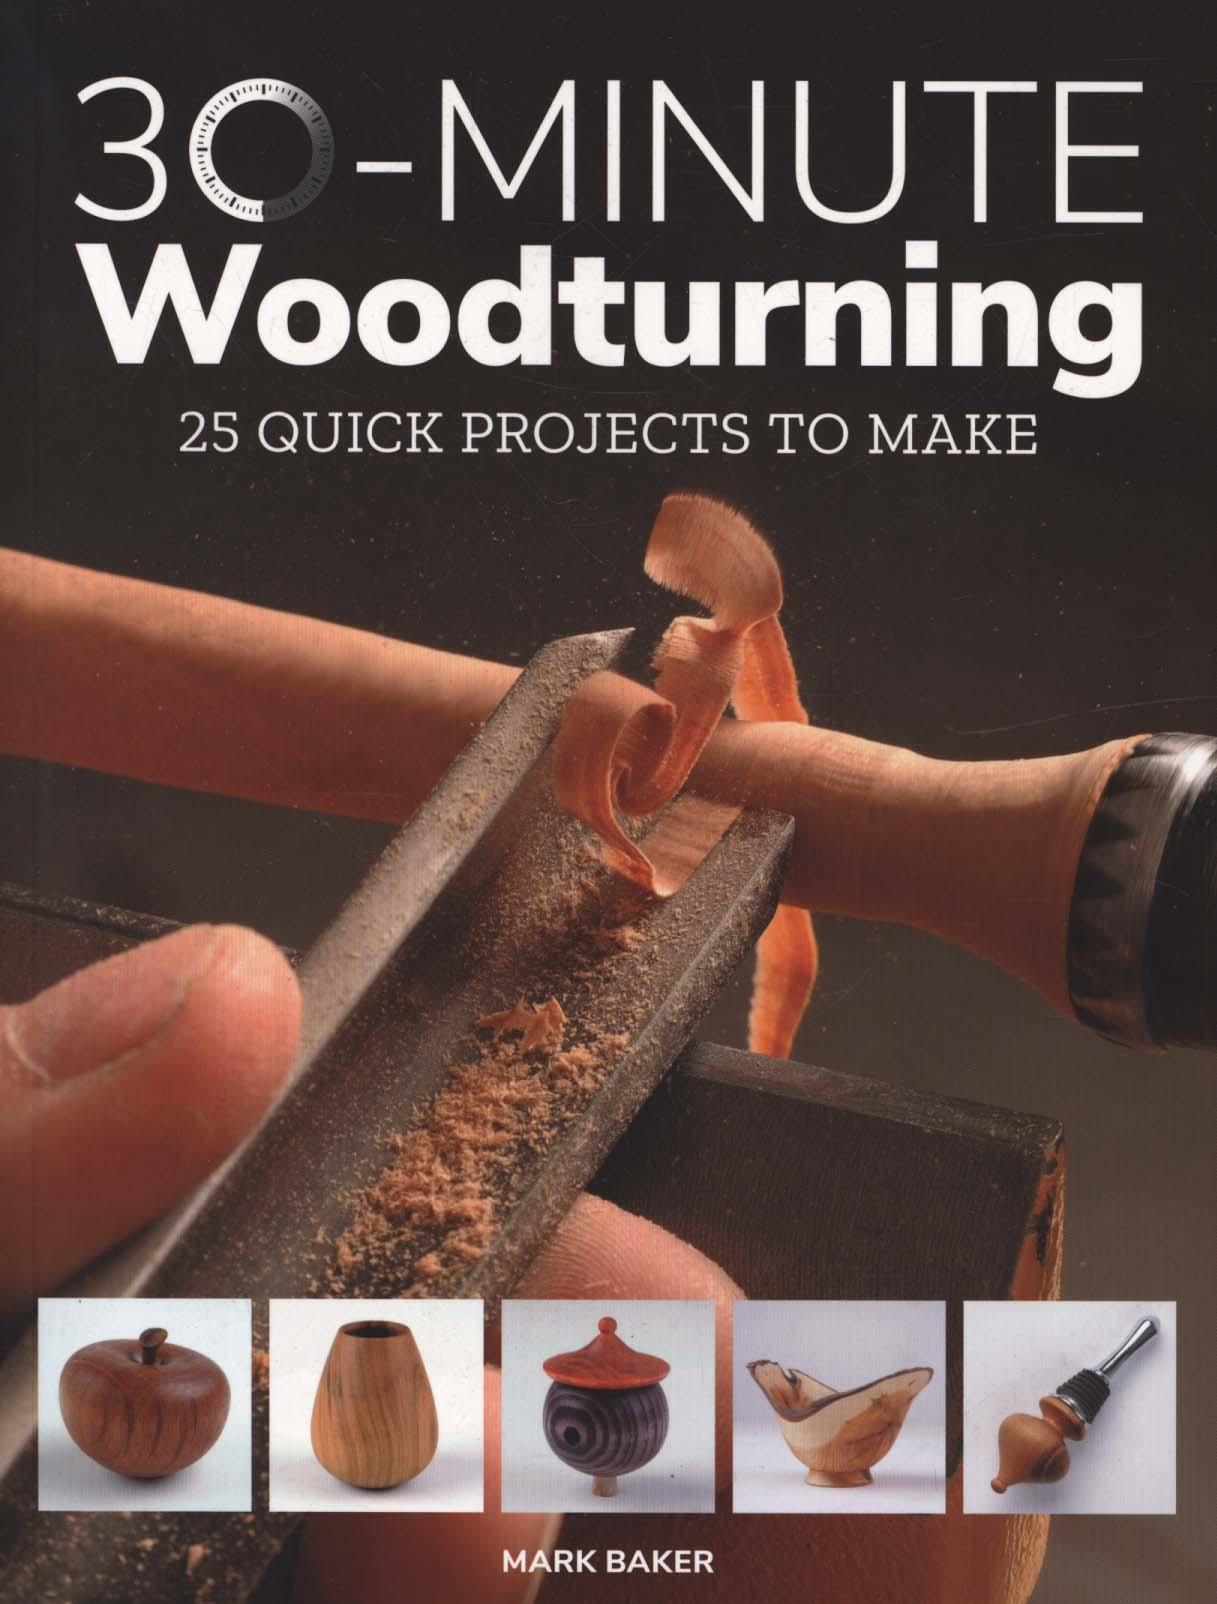 30-Minute Woodturning